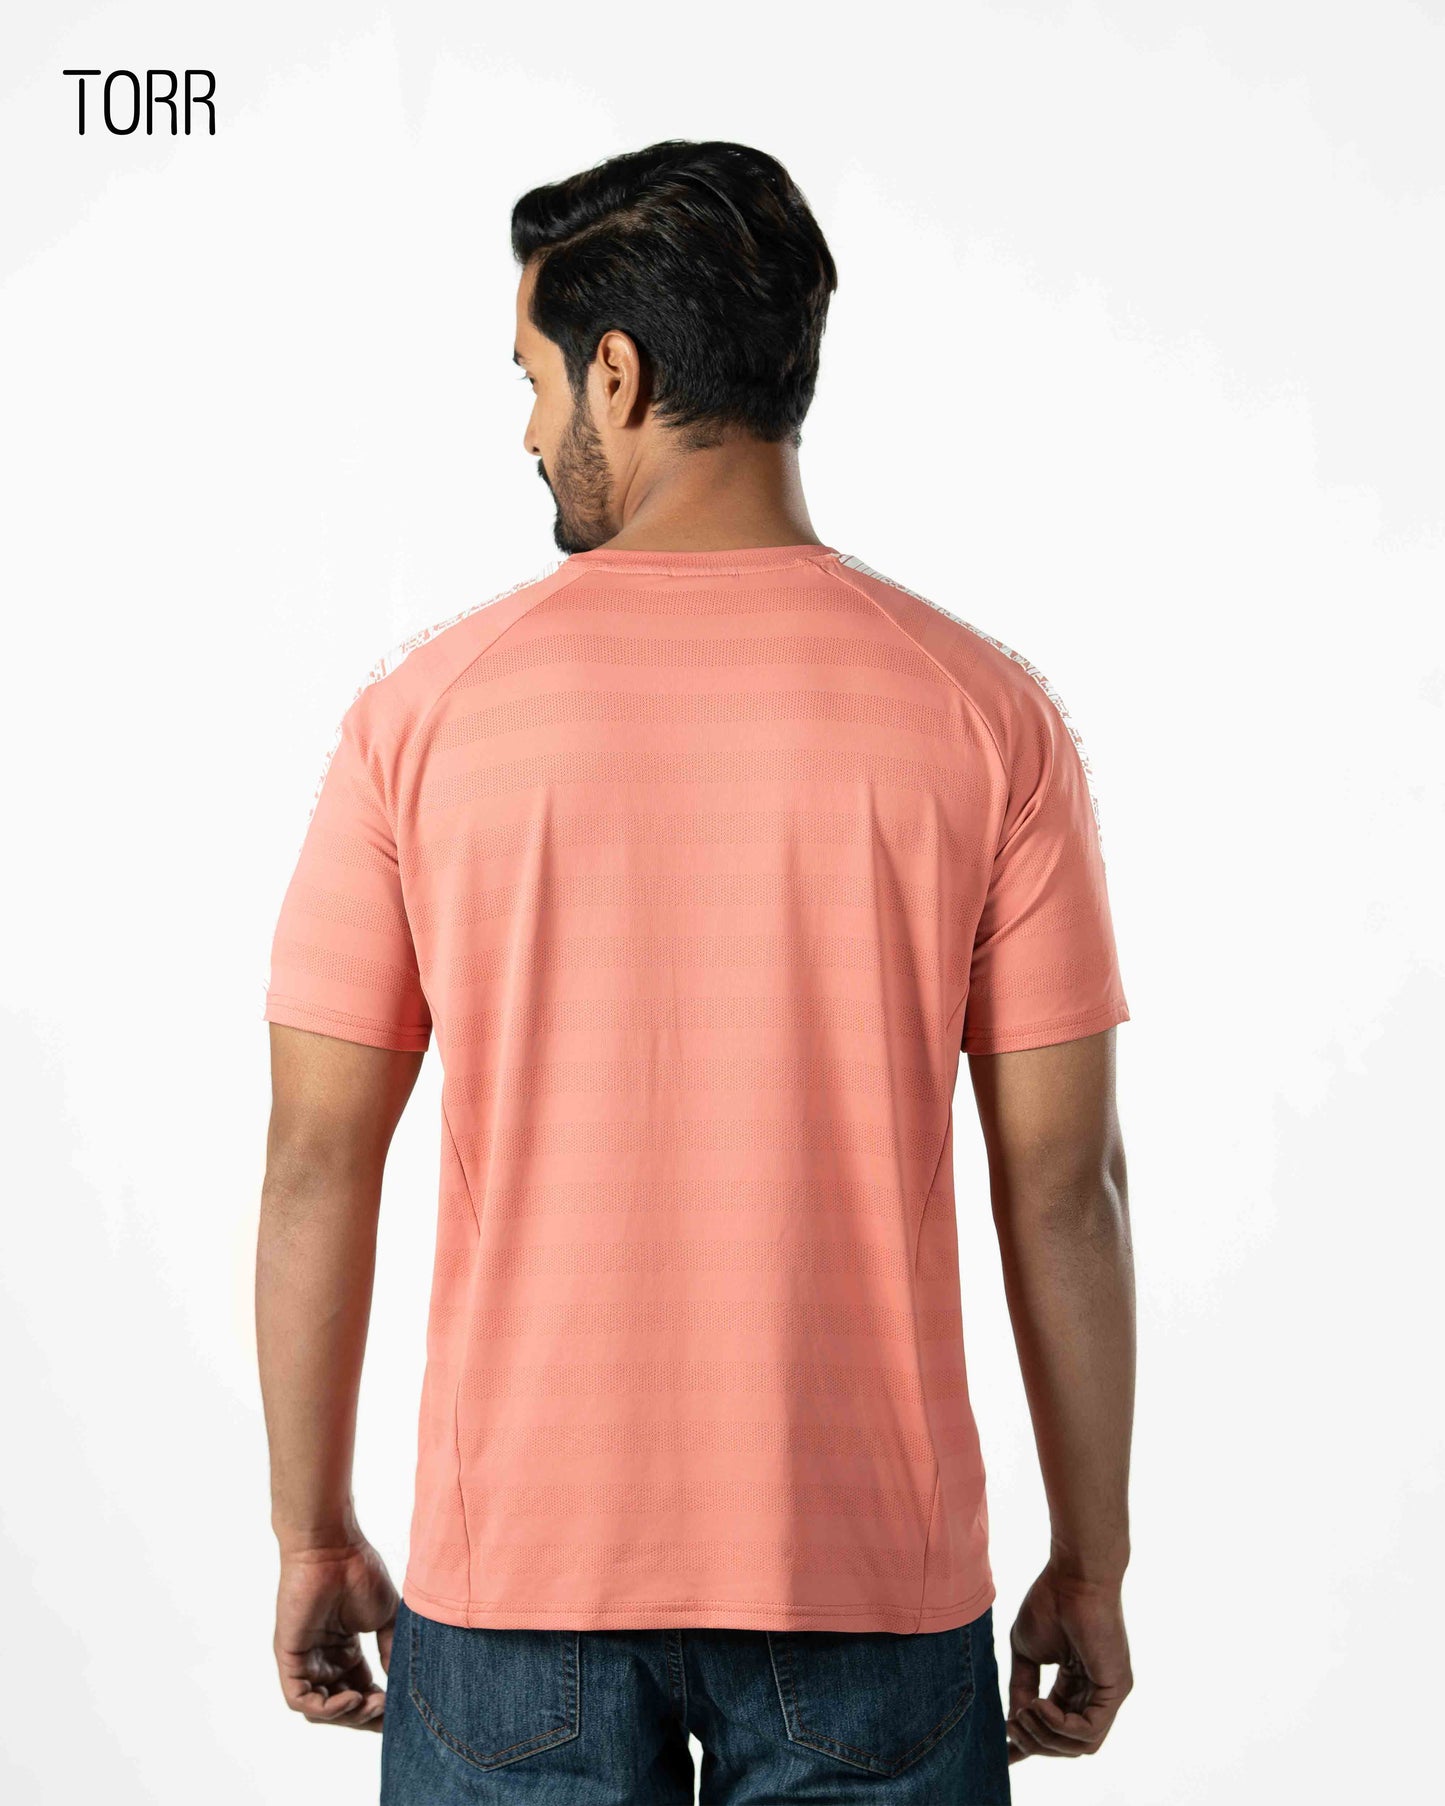 Men's Activewear T-shirt | Coral